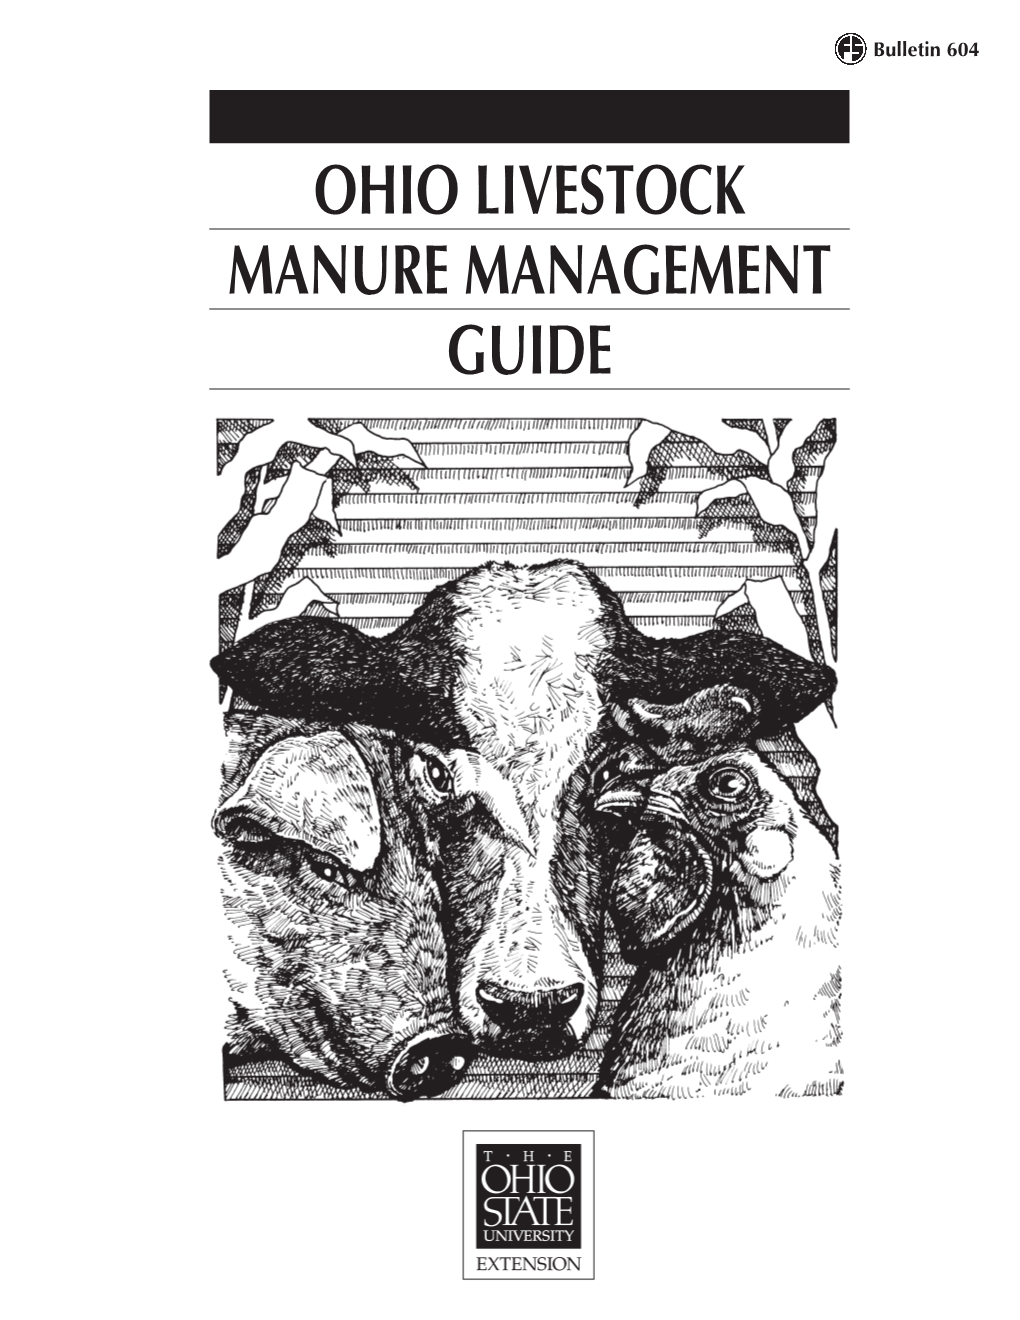 Ohio Livestock Manure Management Guide (Bulletin 604)